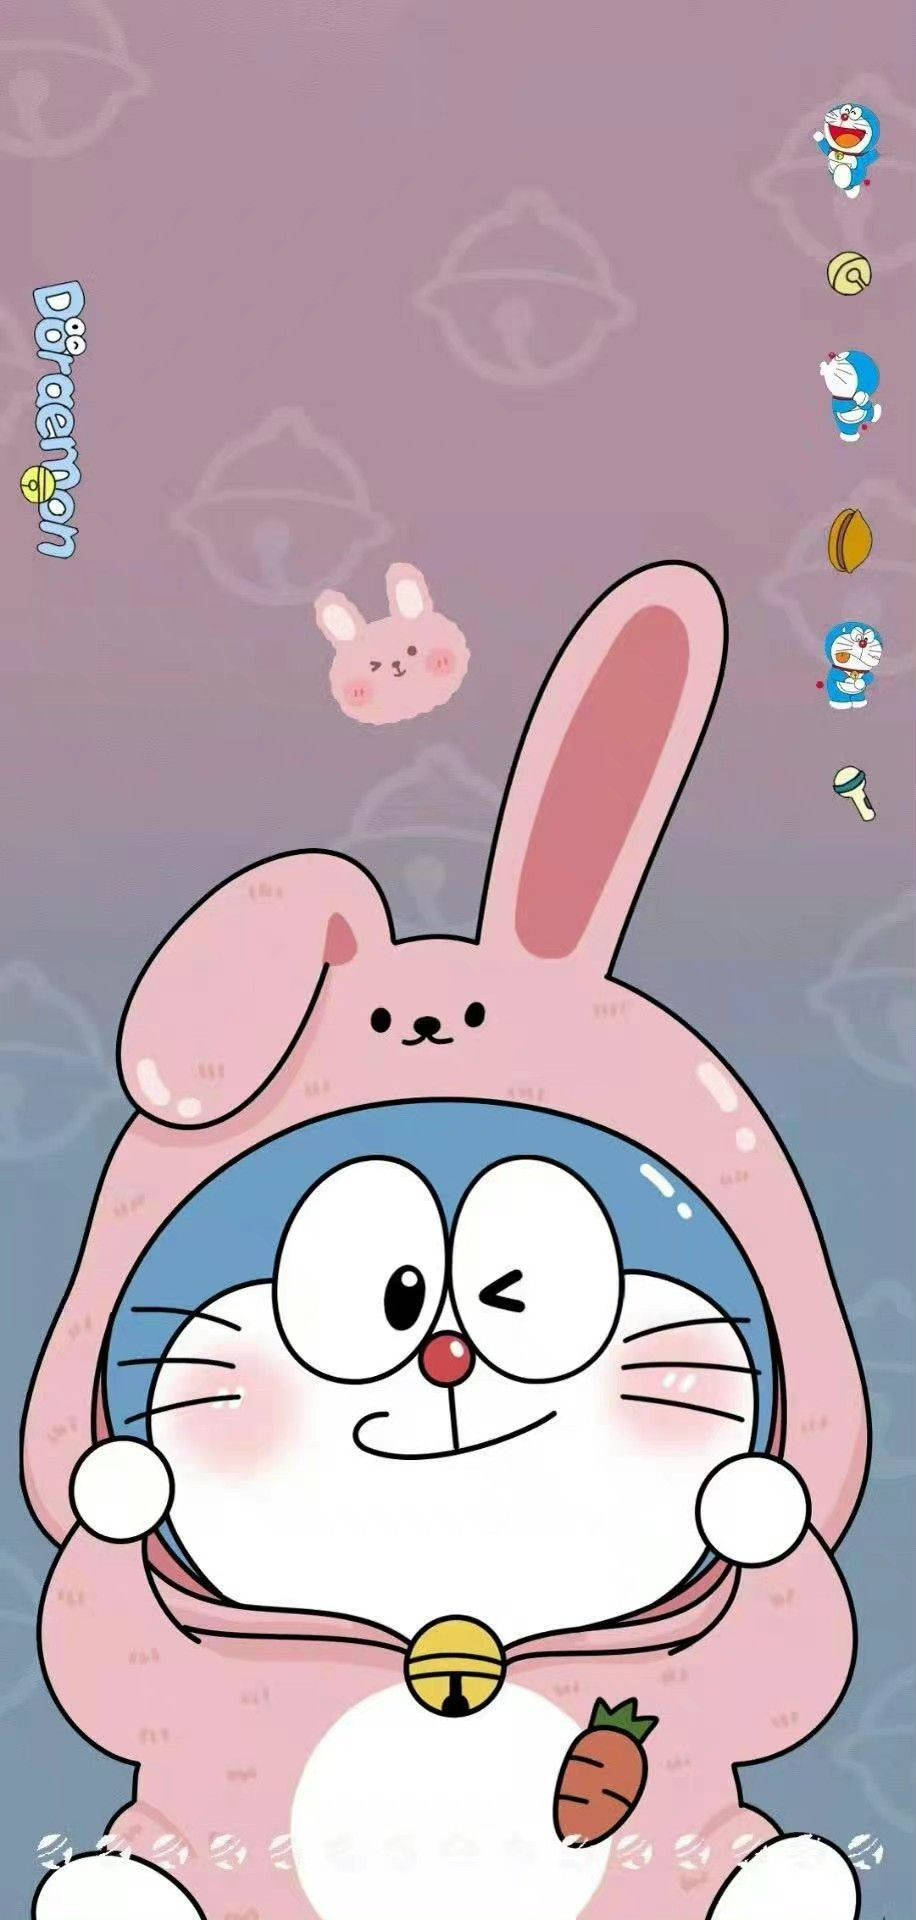 Free Doraemon Iphone Wallpaper Downloads 100 Doraemon Iphone Wallpapers  for FREE  Wallpaperscom